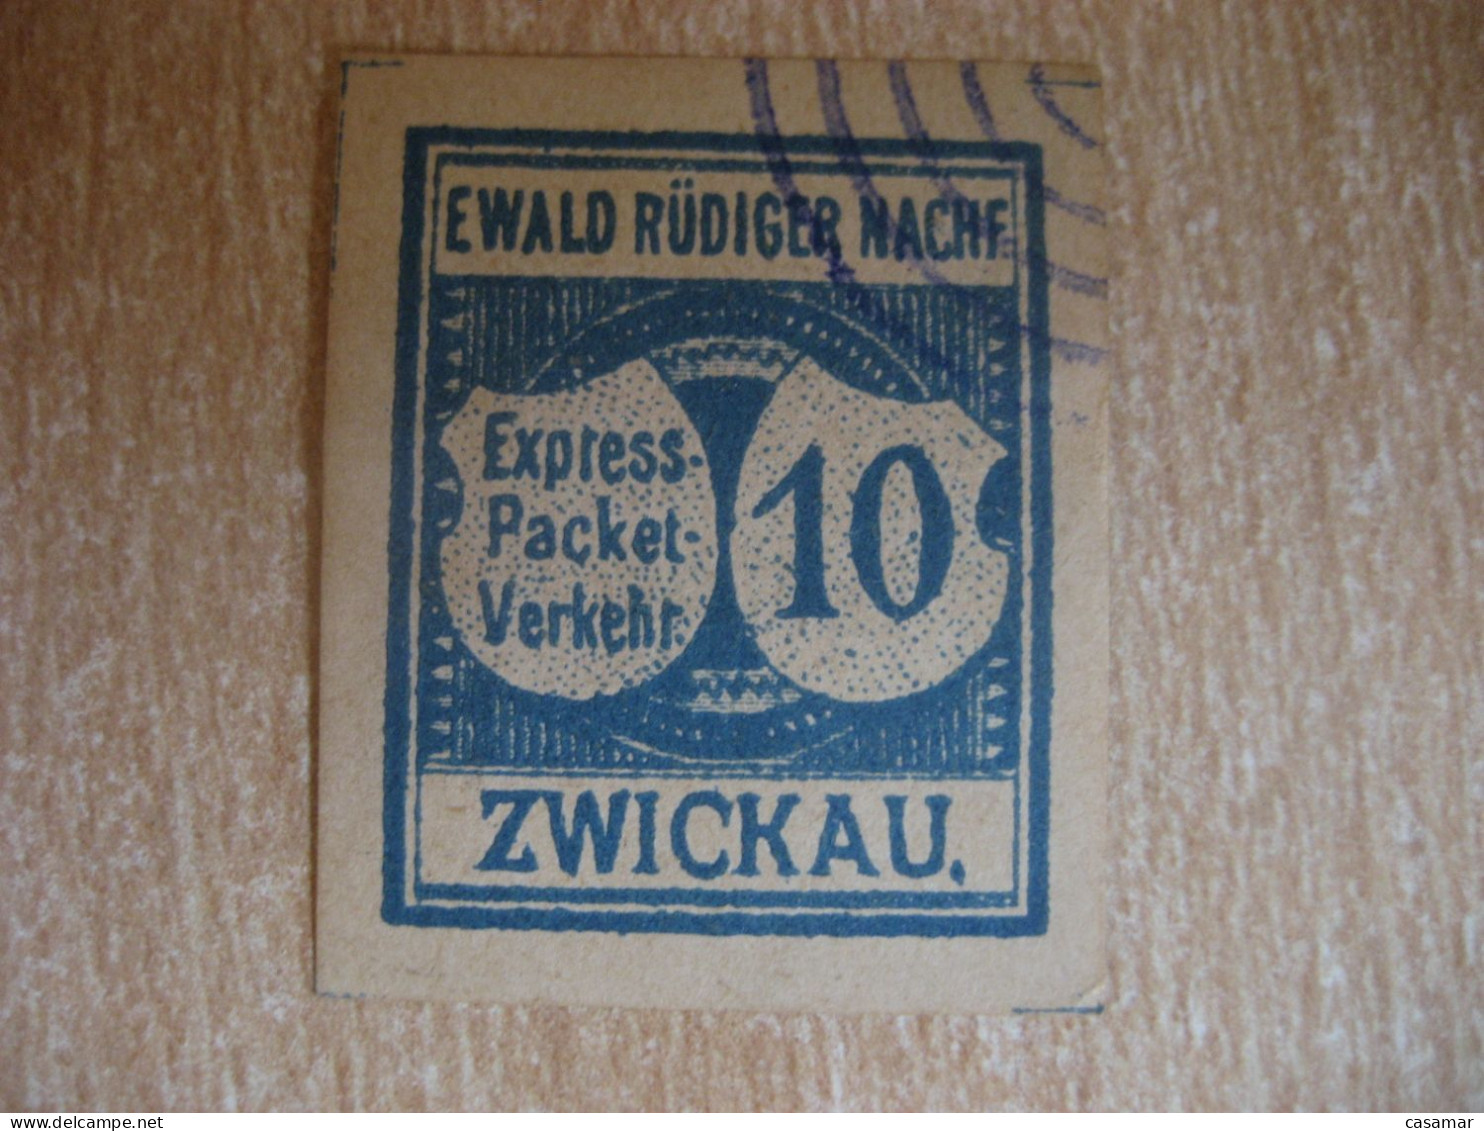 ZWICKAU 1889 Ewald Rudiger Nachf 10 Pf Michel A2 Express-Packet-Verkehr Privat Private Local Stamp GERMANY - Private & Local Mails